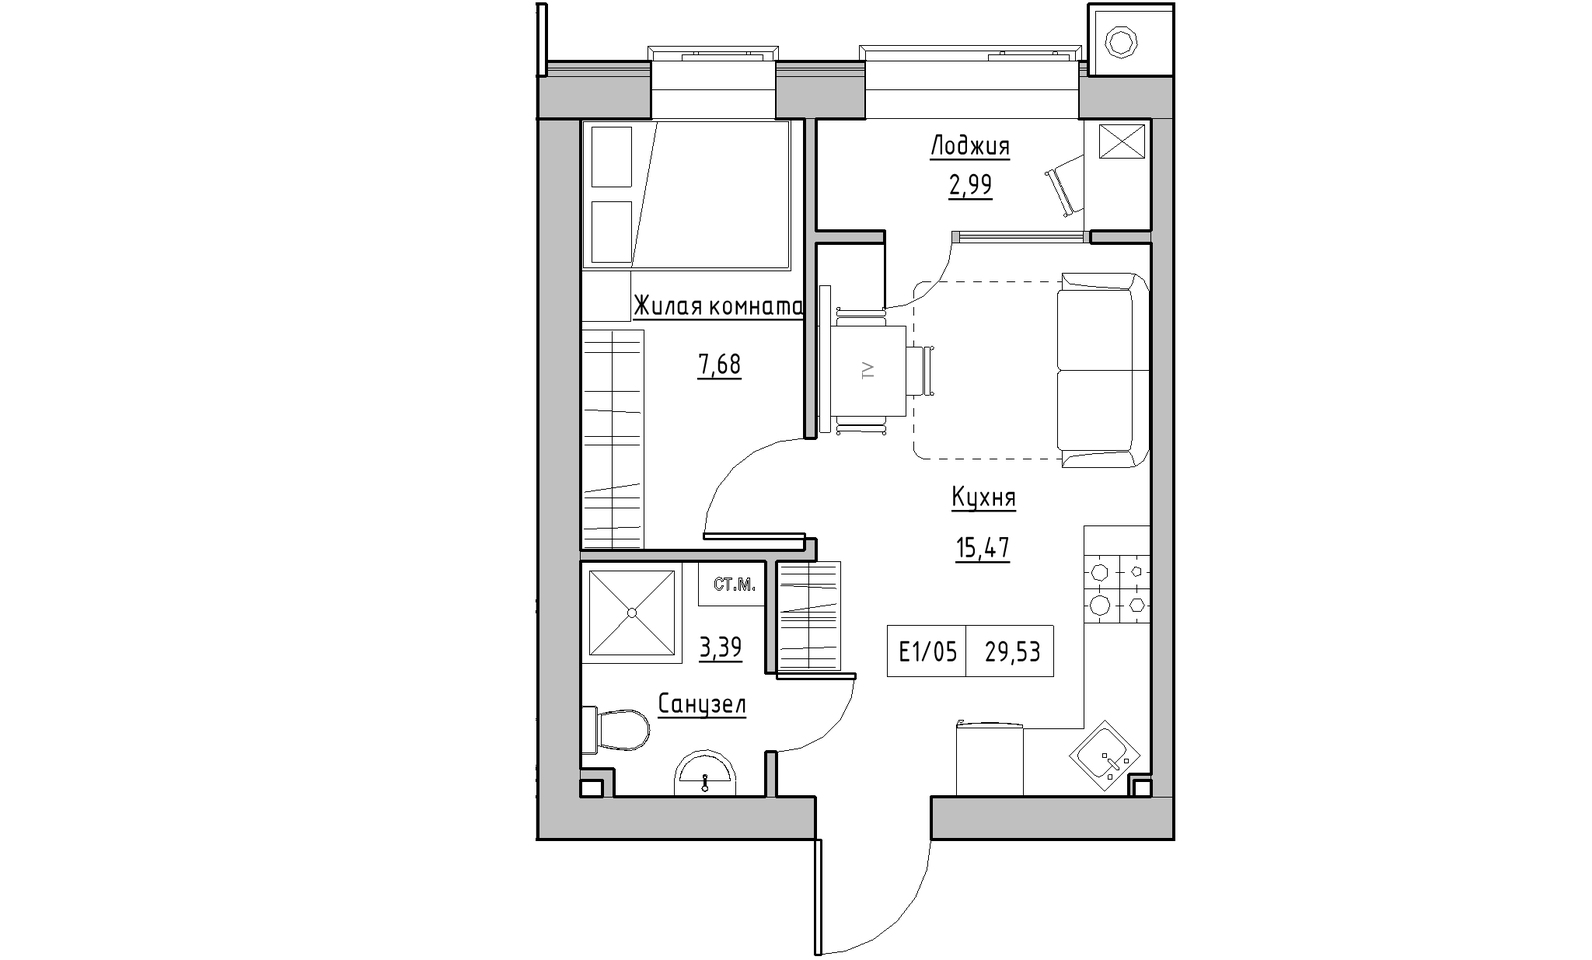 Planning 1-rm flats area 29.53m2, KS-014-02/0006.